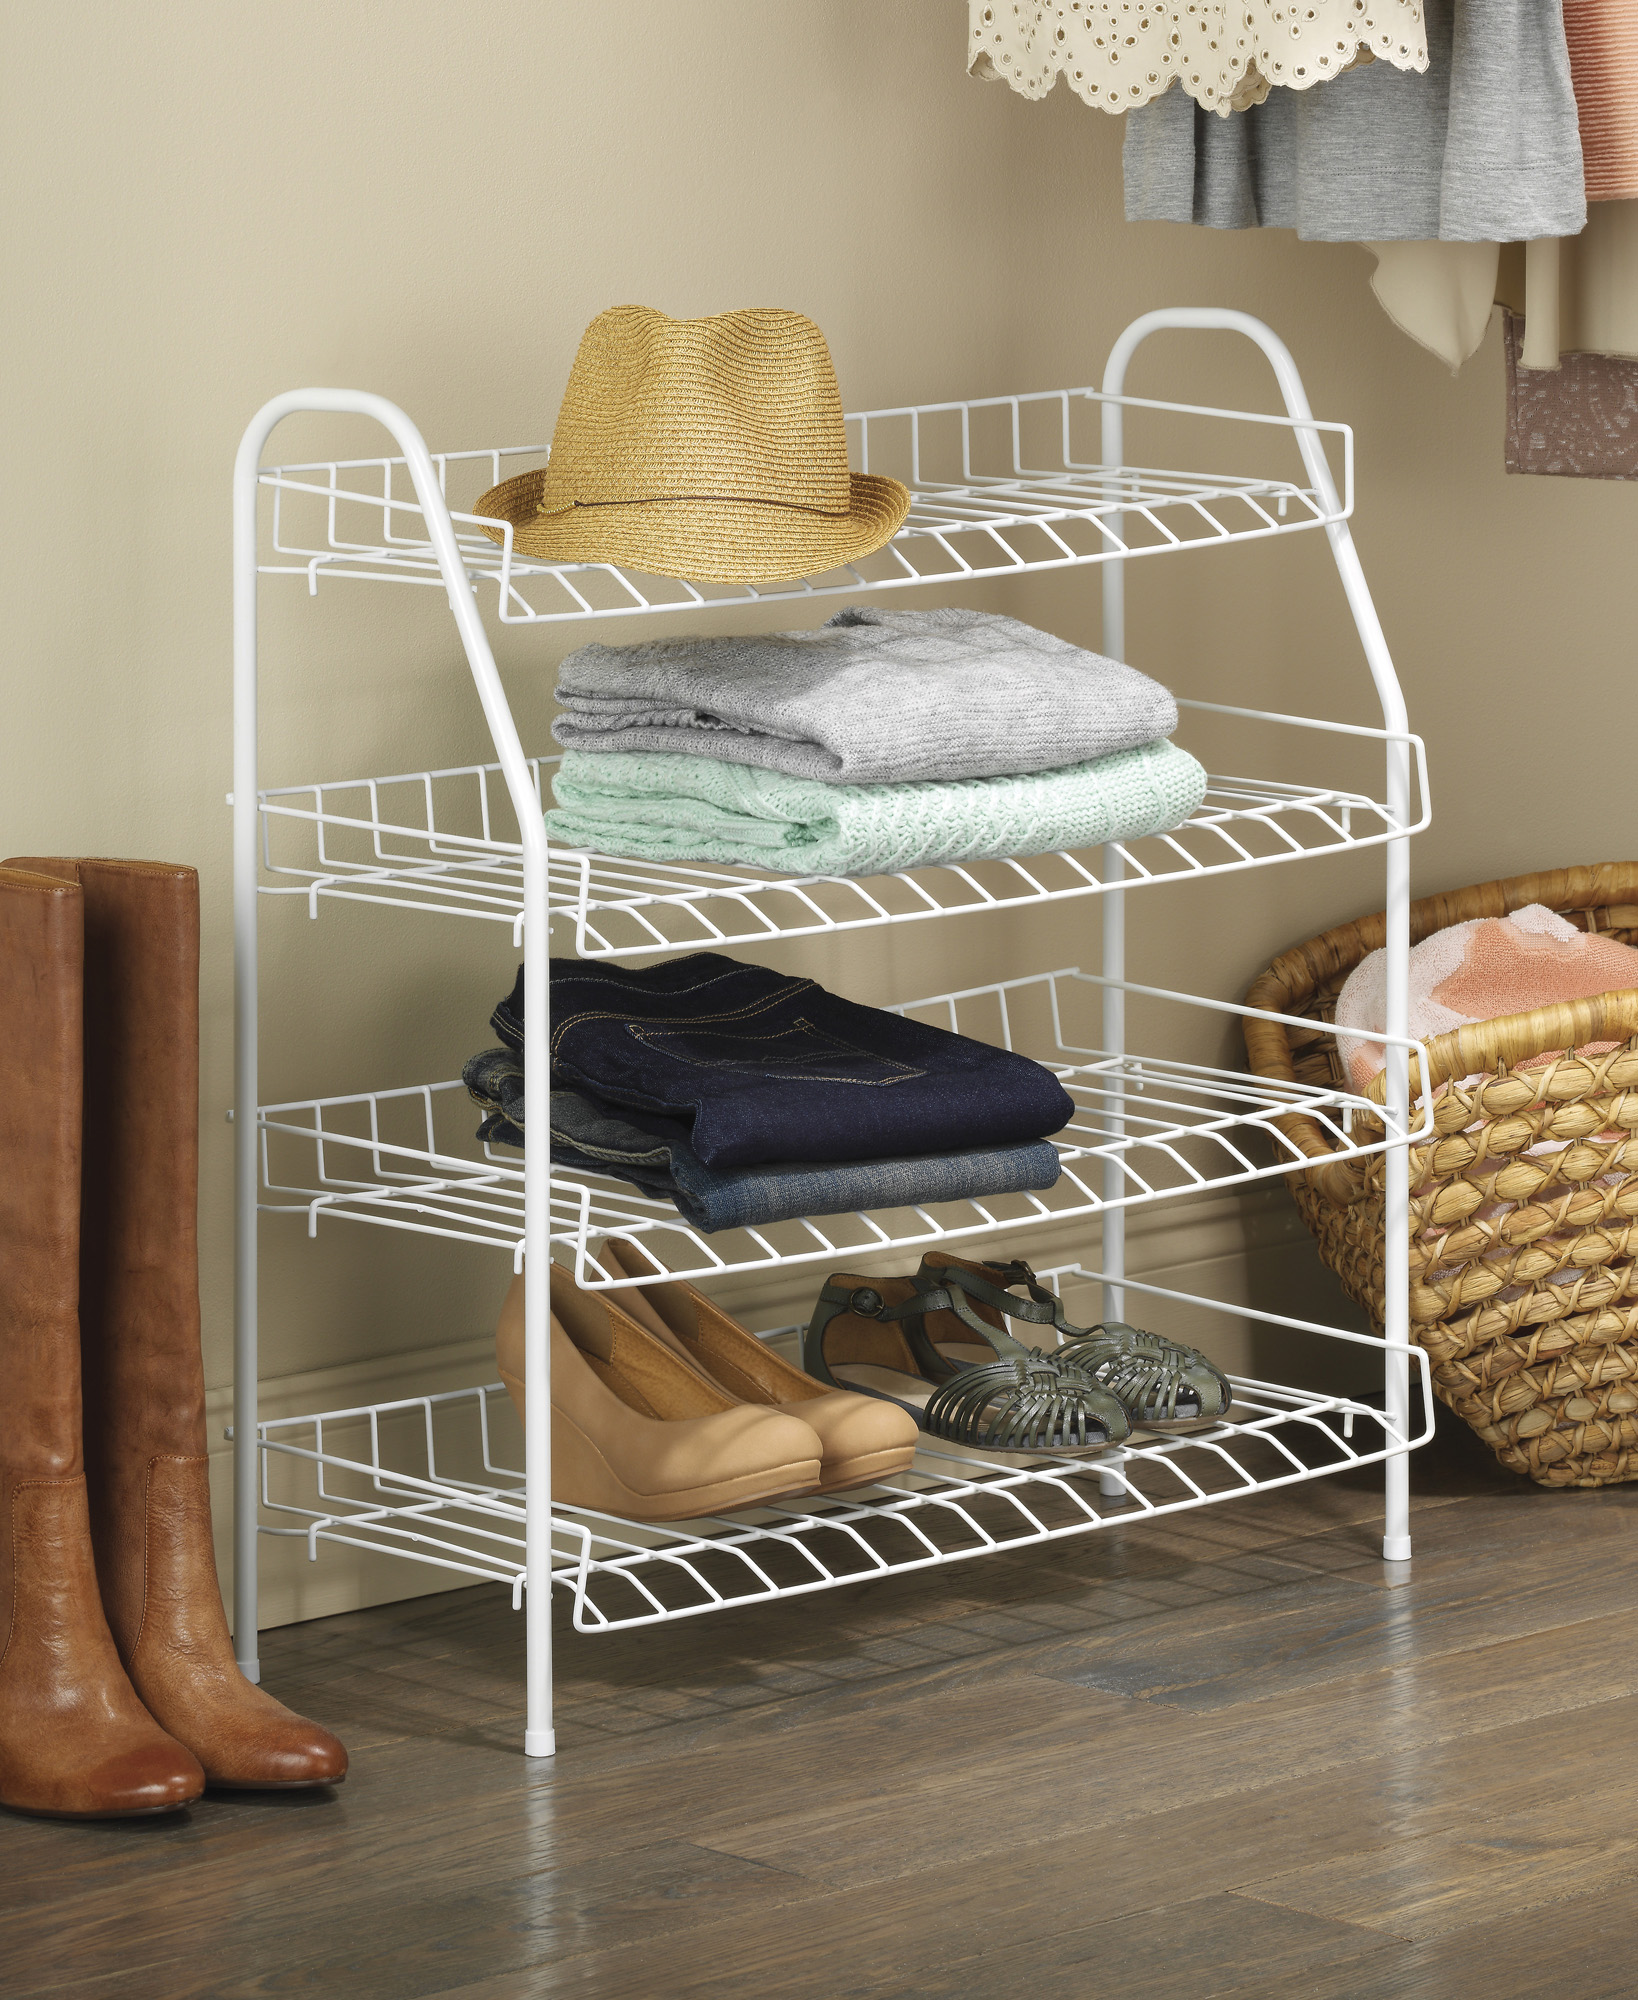 Whitmor 4-Tier Accessory Shelves Shoe Rack, Metal, White - image 3 of 8